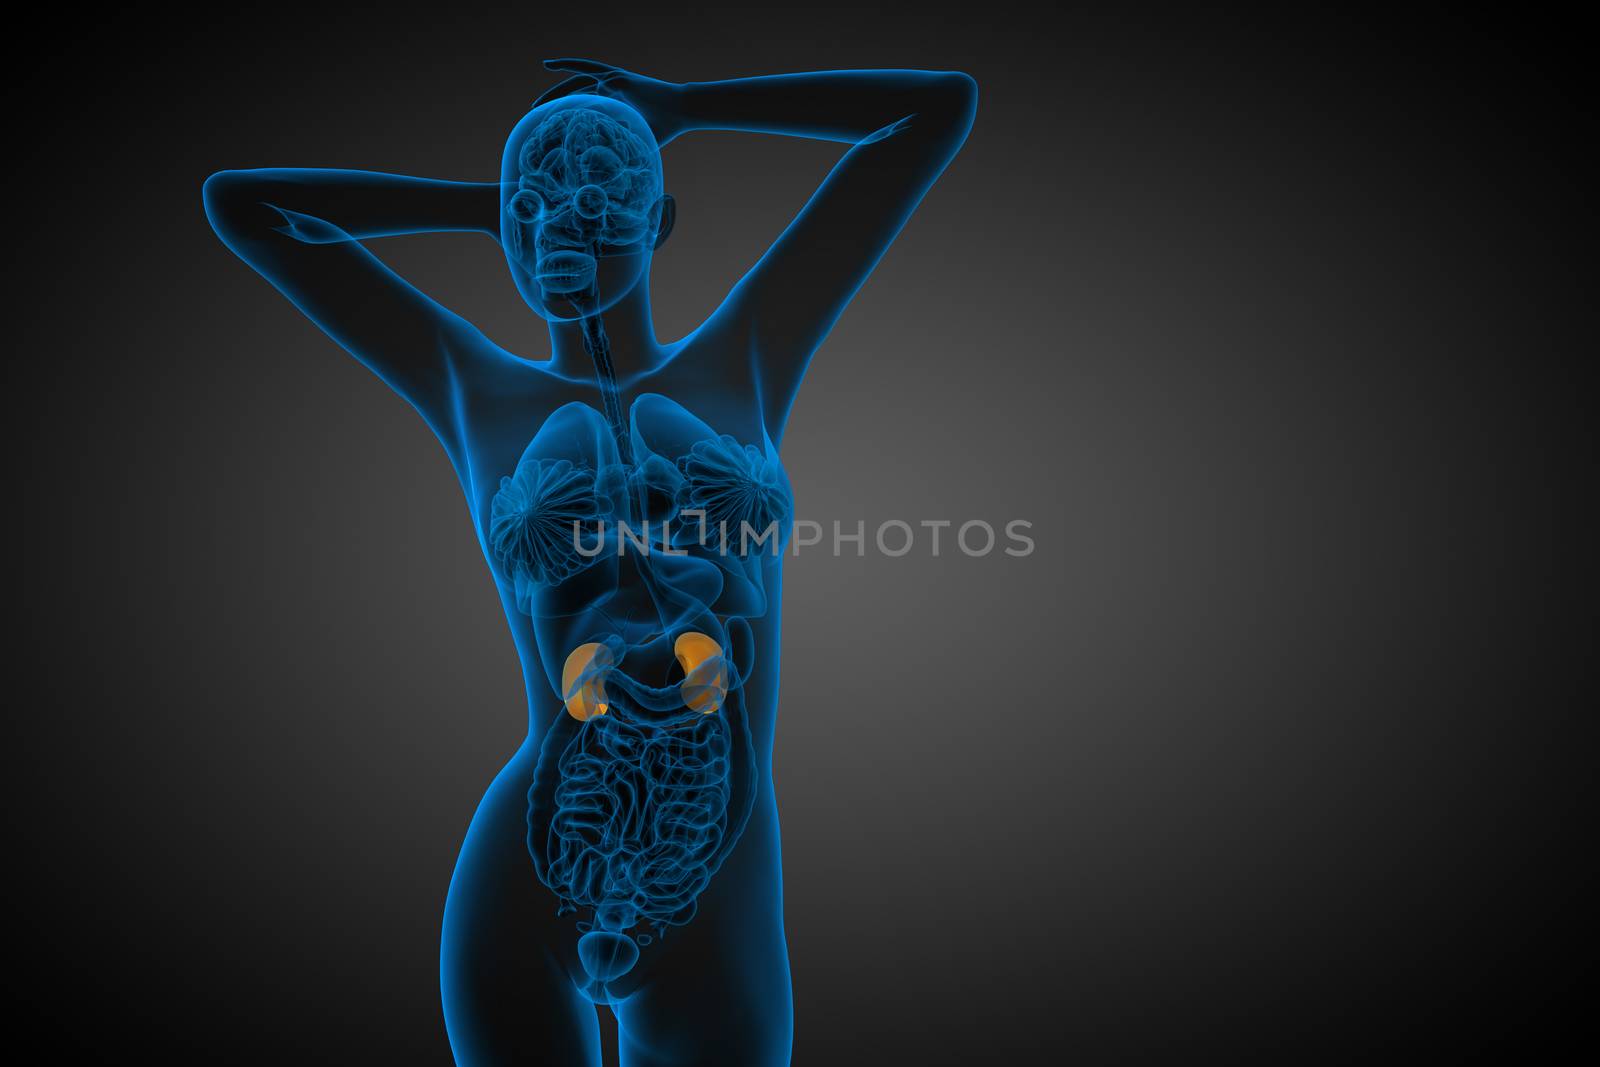 3d render medical illustration of the human kidney - front view